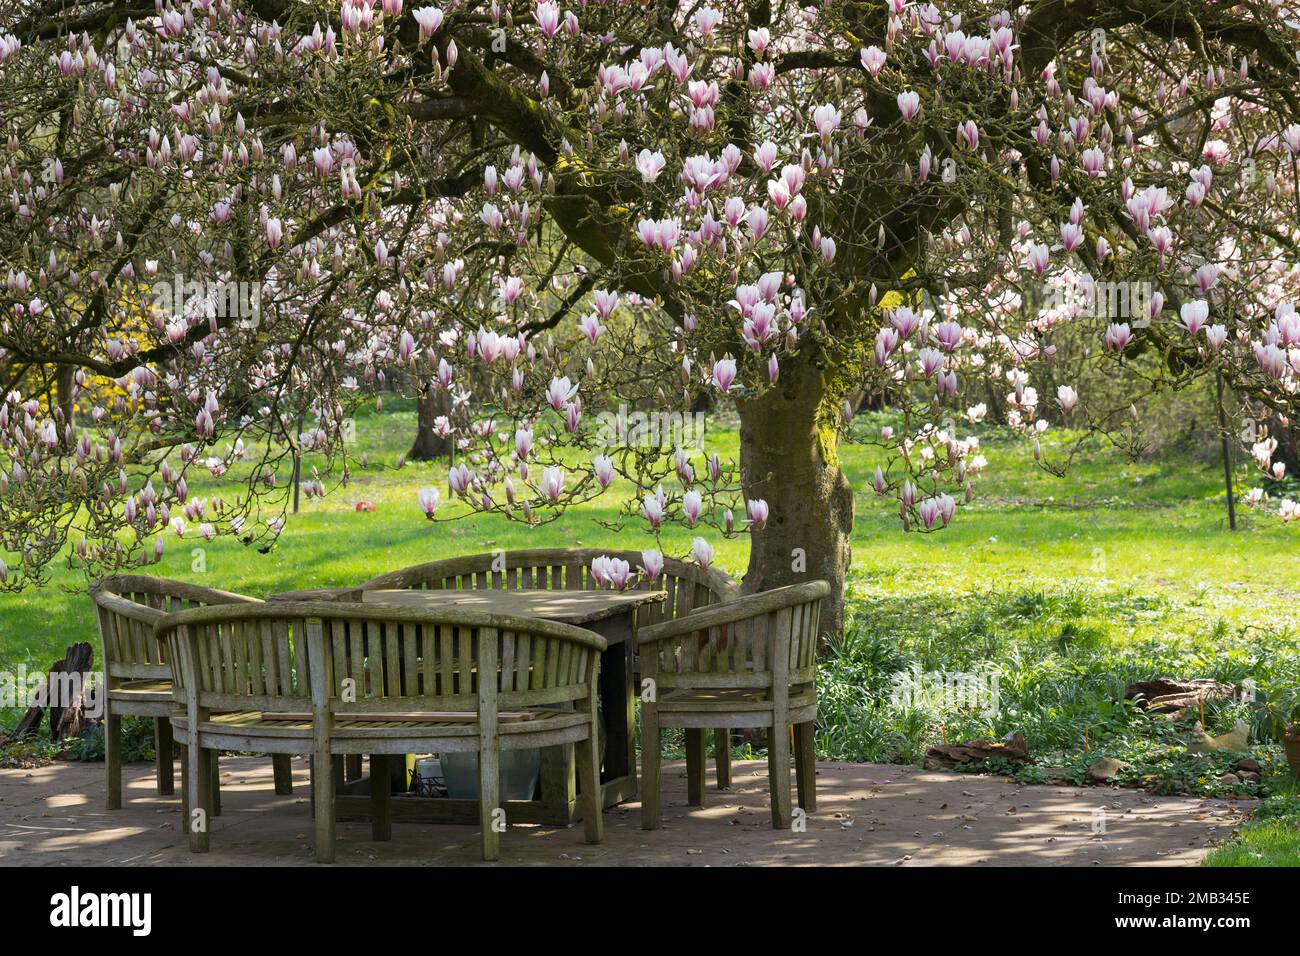 Tulpen-Magnolie, Blüten, blühend, mit Sitzgruppe, Gartenmöbel, Sitzplatz, Tulpennagnolie, Tulpen-Magnolie, Magnolienbaum, Gartenmagnolie, Garten-Magno Foto Stock